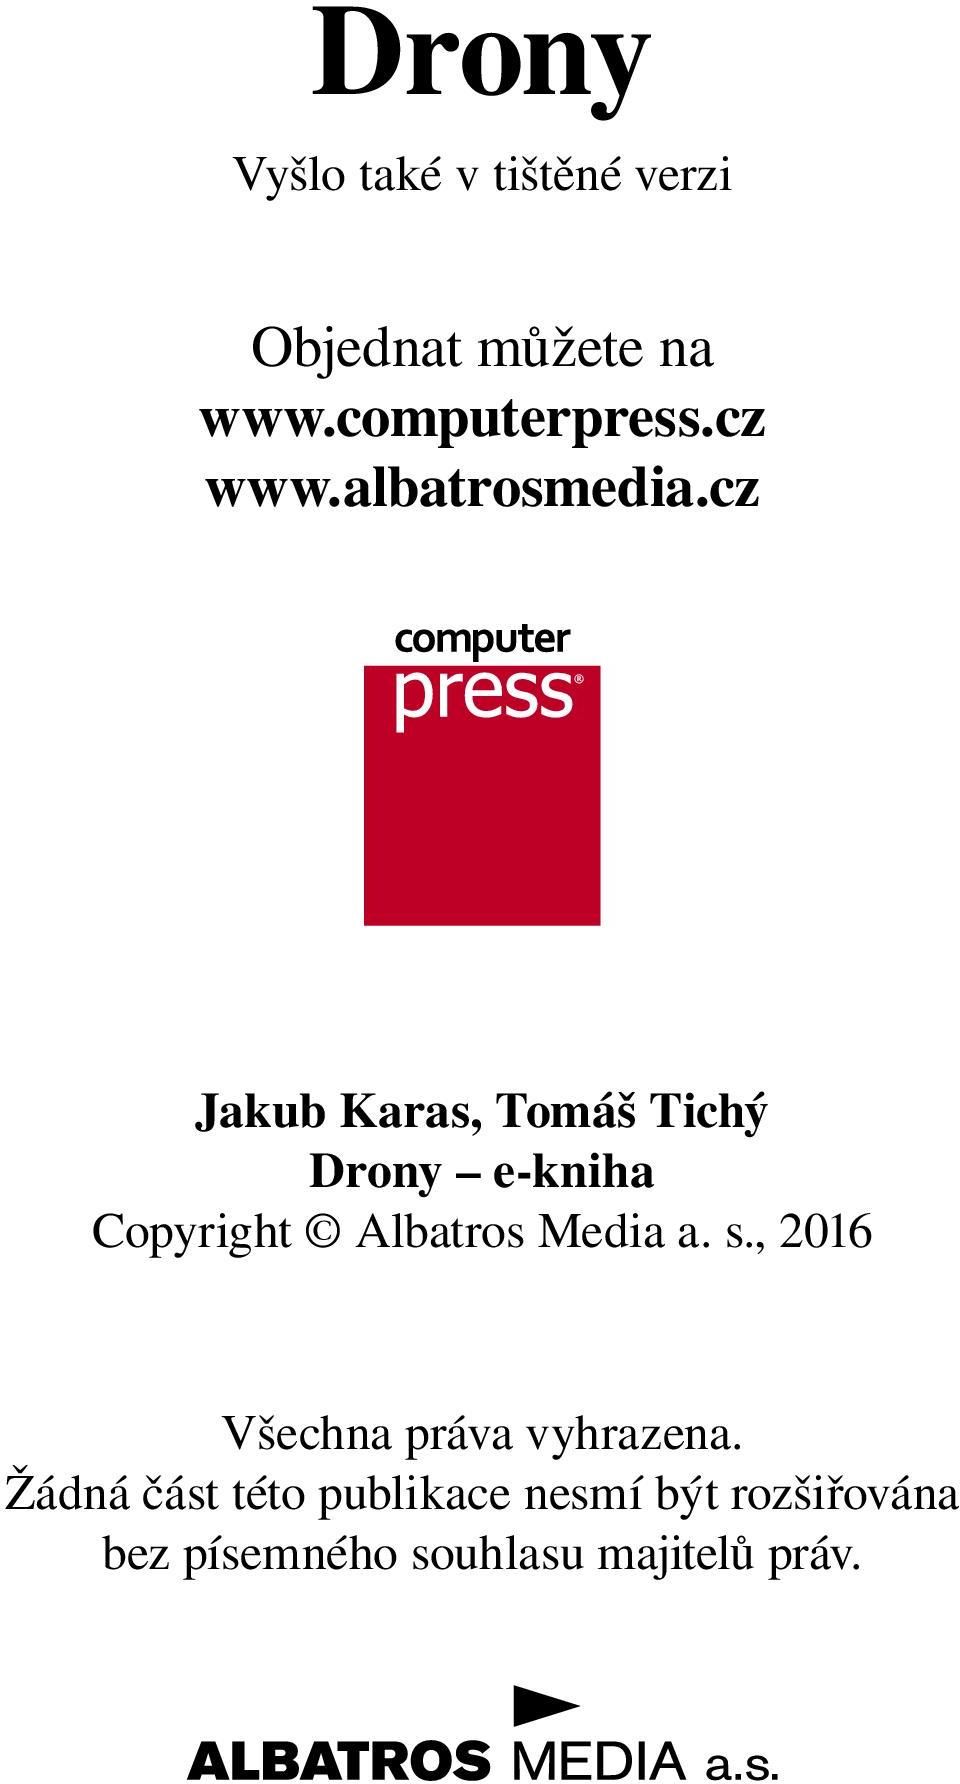 cz Jakub Karas, Tomáš Tichý Drony e-kniha Copyright Albatros Media a.